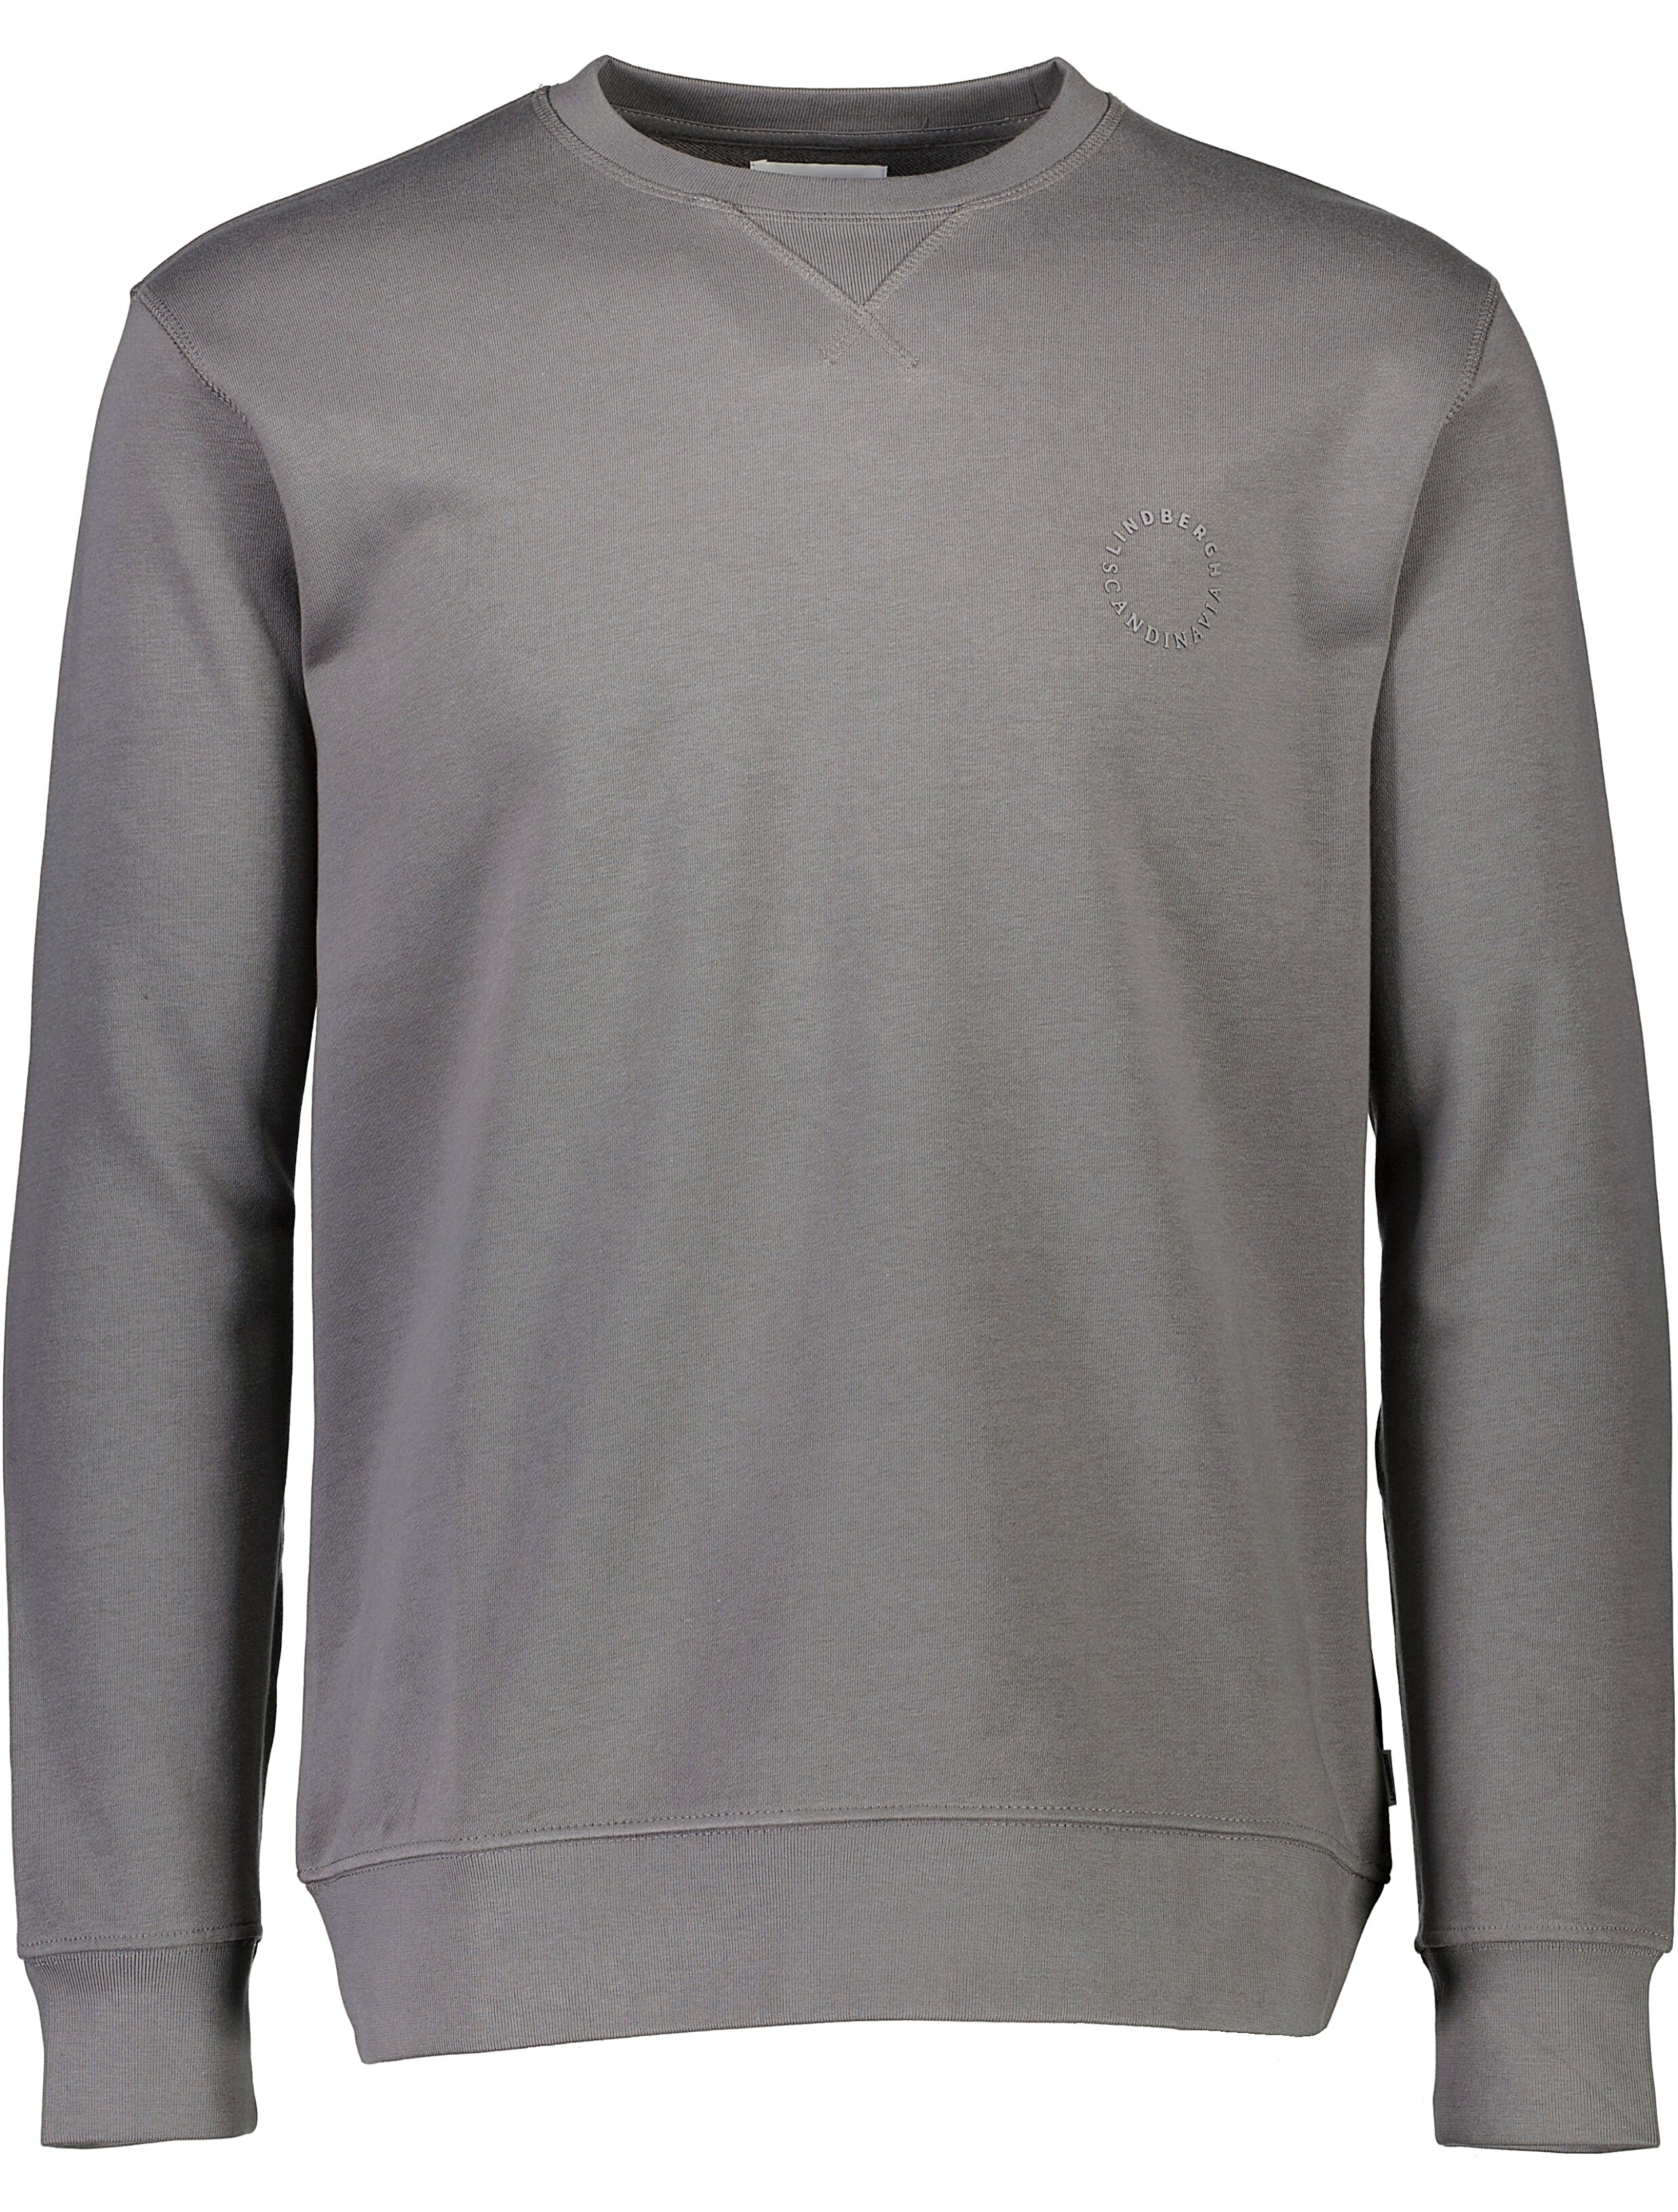 Lindbergh Sweatshirt grey / dk grey